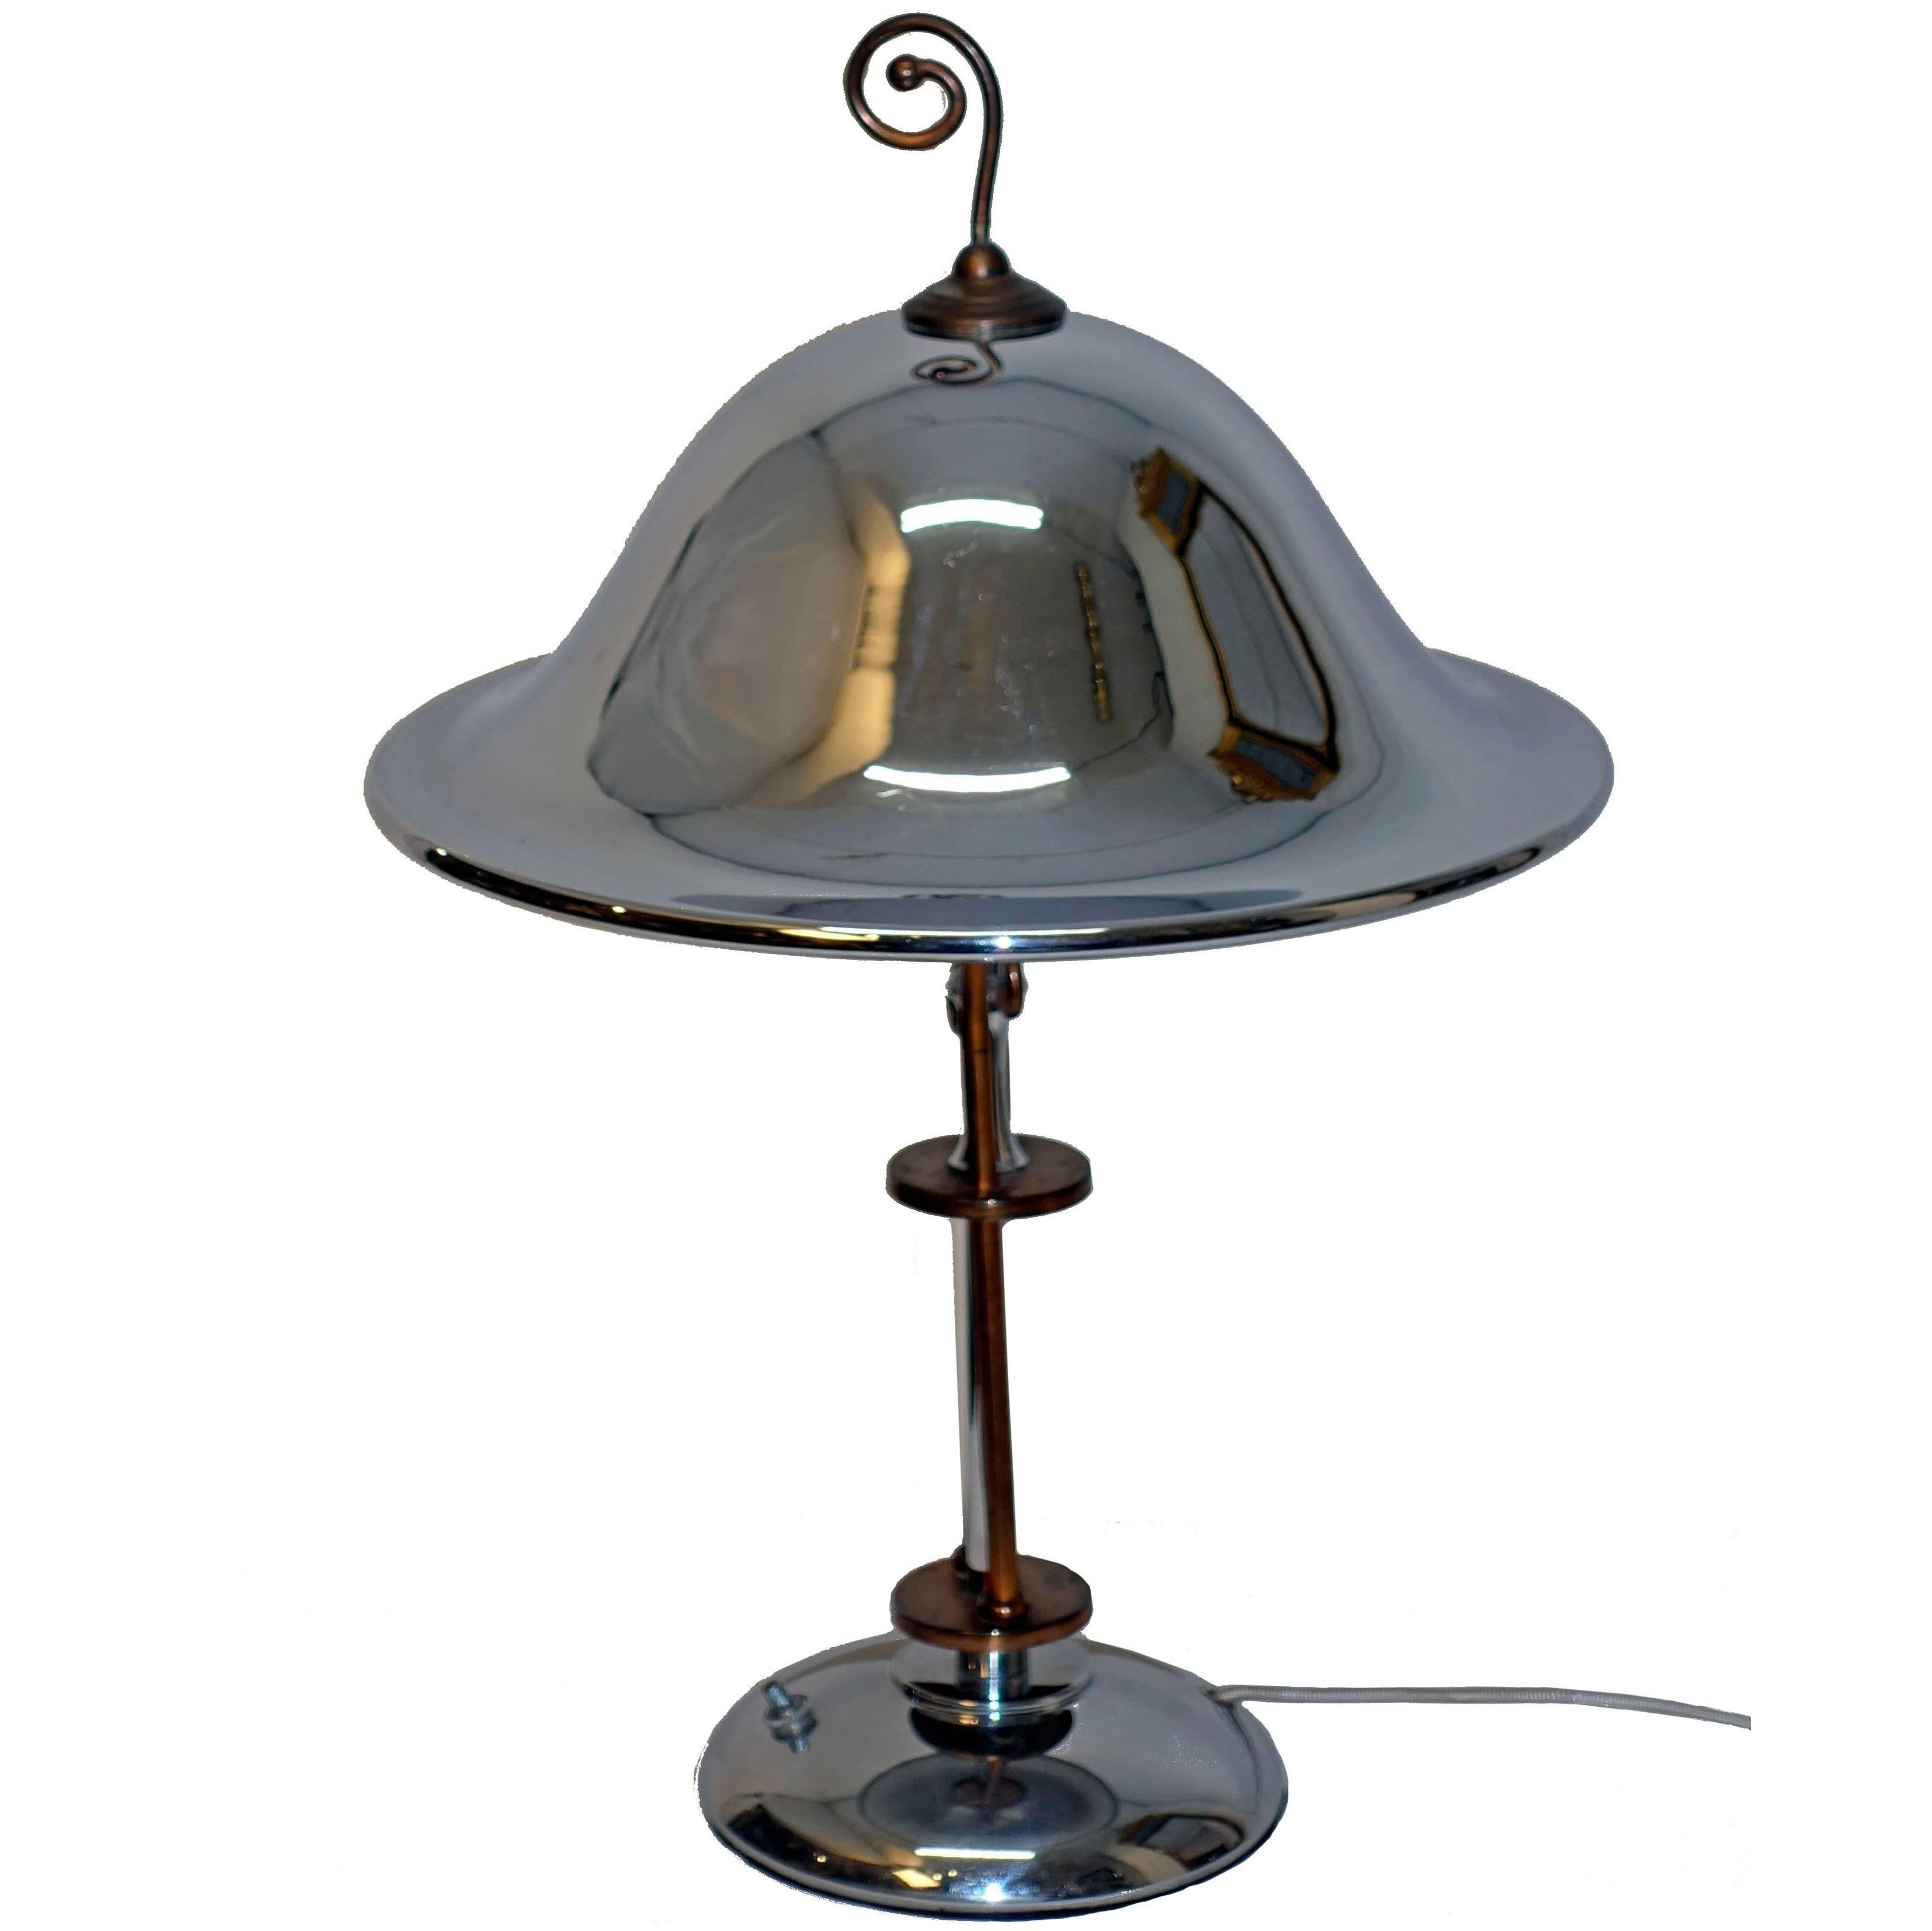  Art Deco Chrome and Copper Lamp, American 1920's-1930's